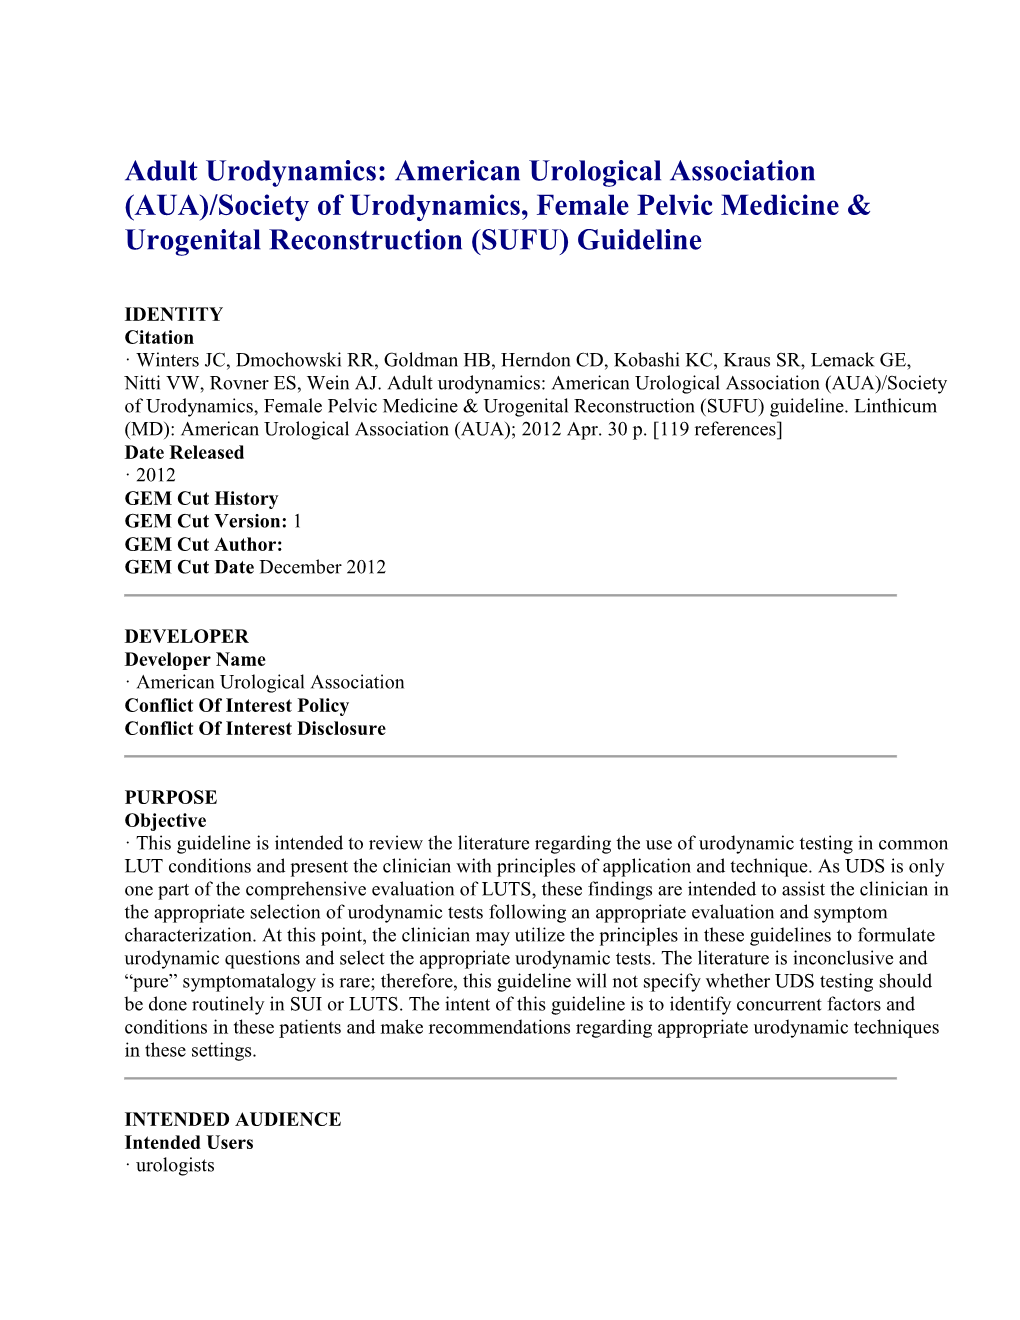 Adult Urodynamics: American Urological Association (AUA)/Society of Urodynamics, Female Pelvic Medicine & Urogenital Reconstruction (SUFU) Guideline